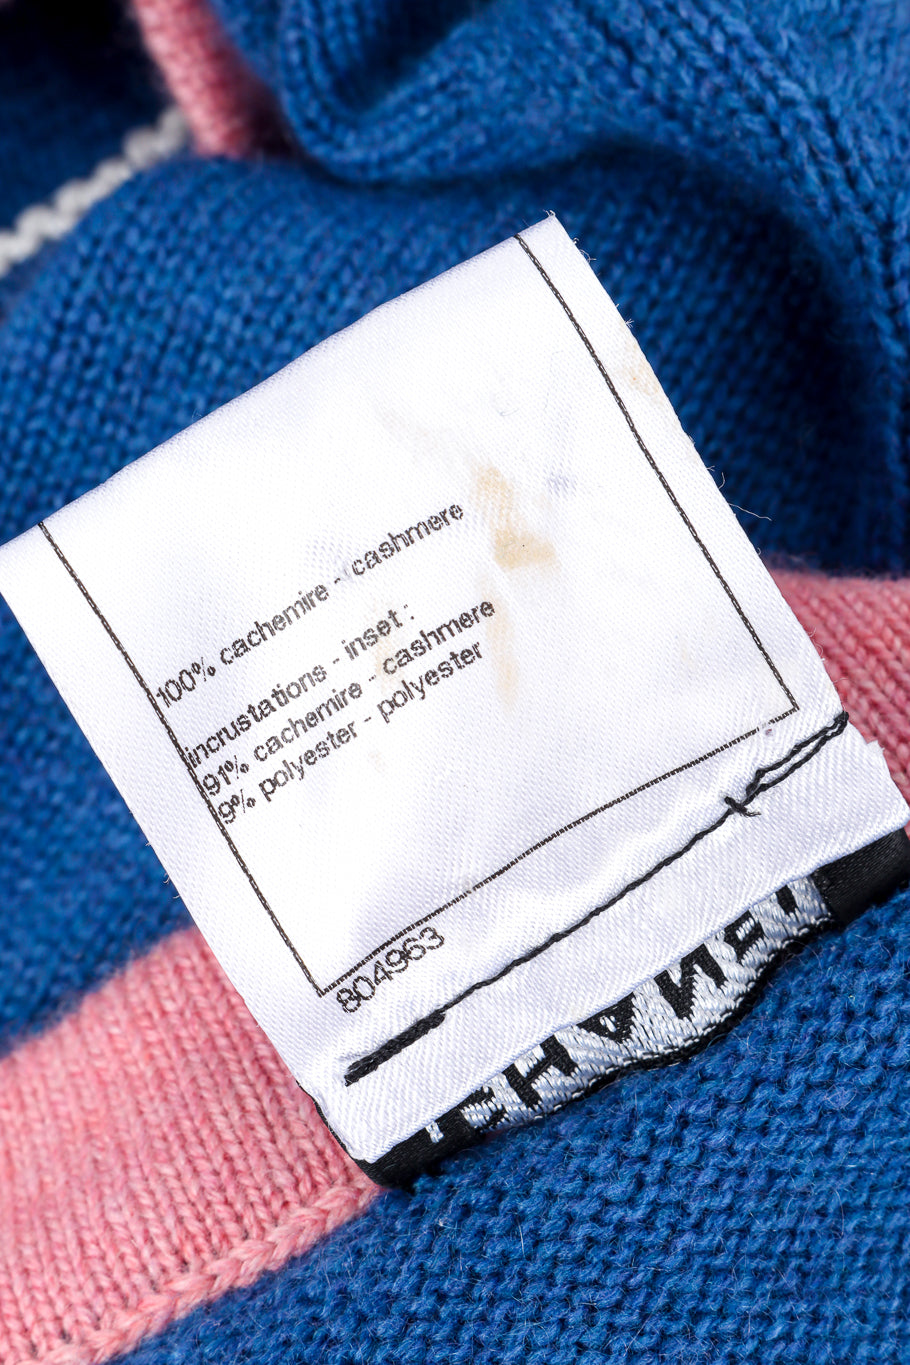 Chanel Cashmere Sweater reverse of content label @recess la